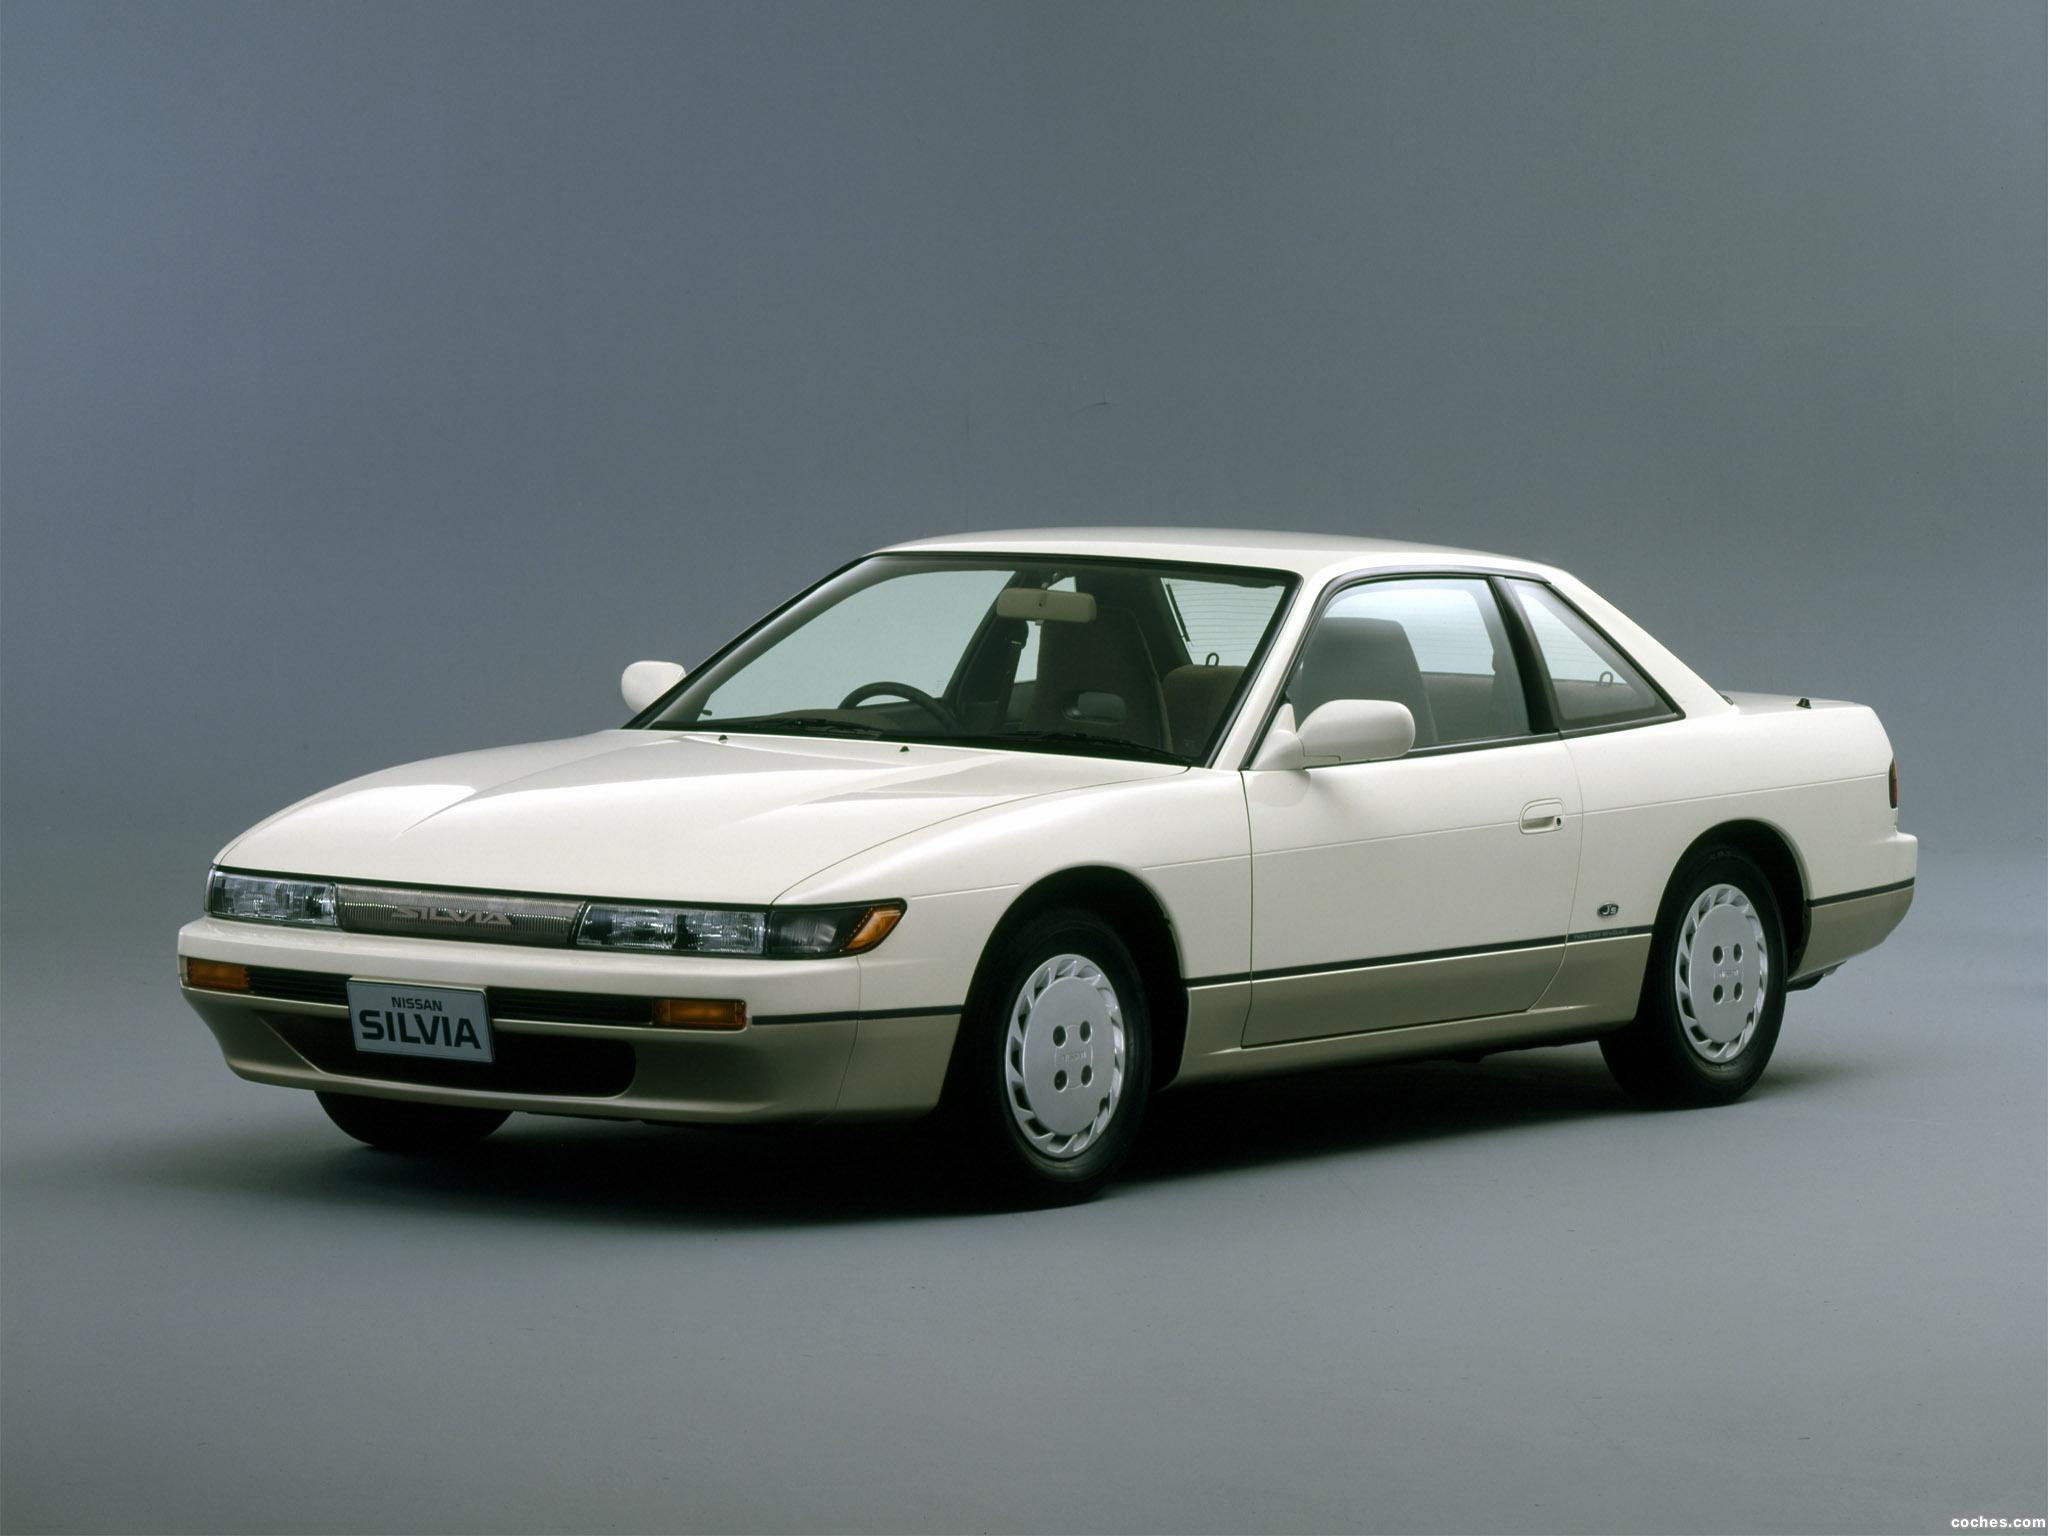 1988 Nissan silvia s13 specs #7